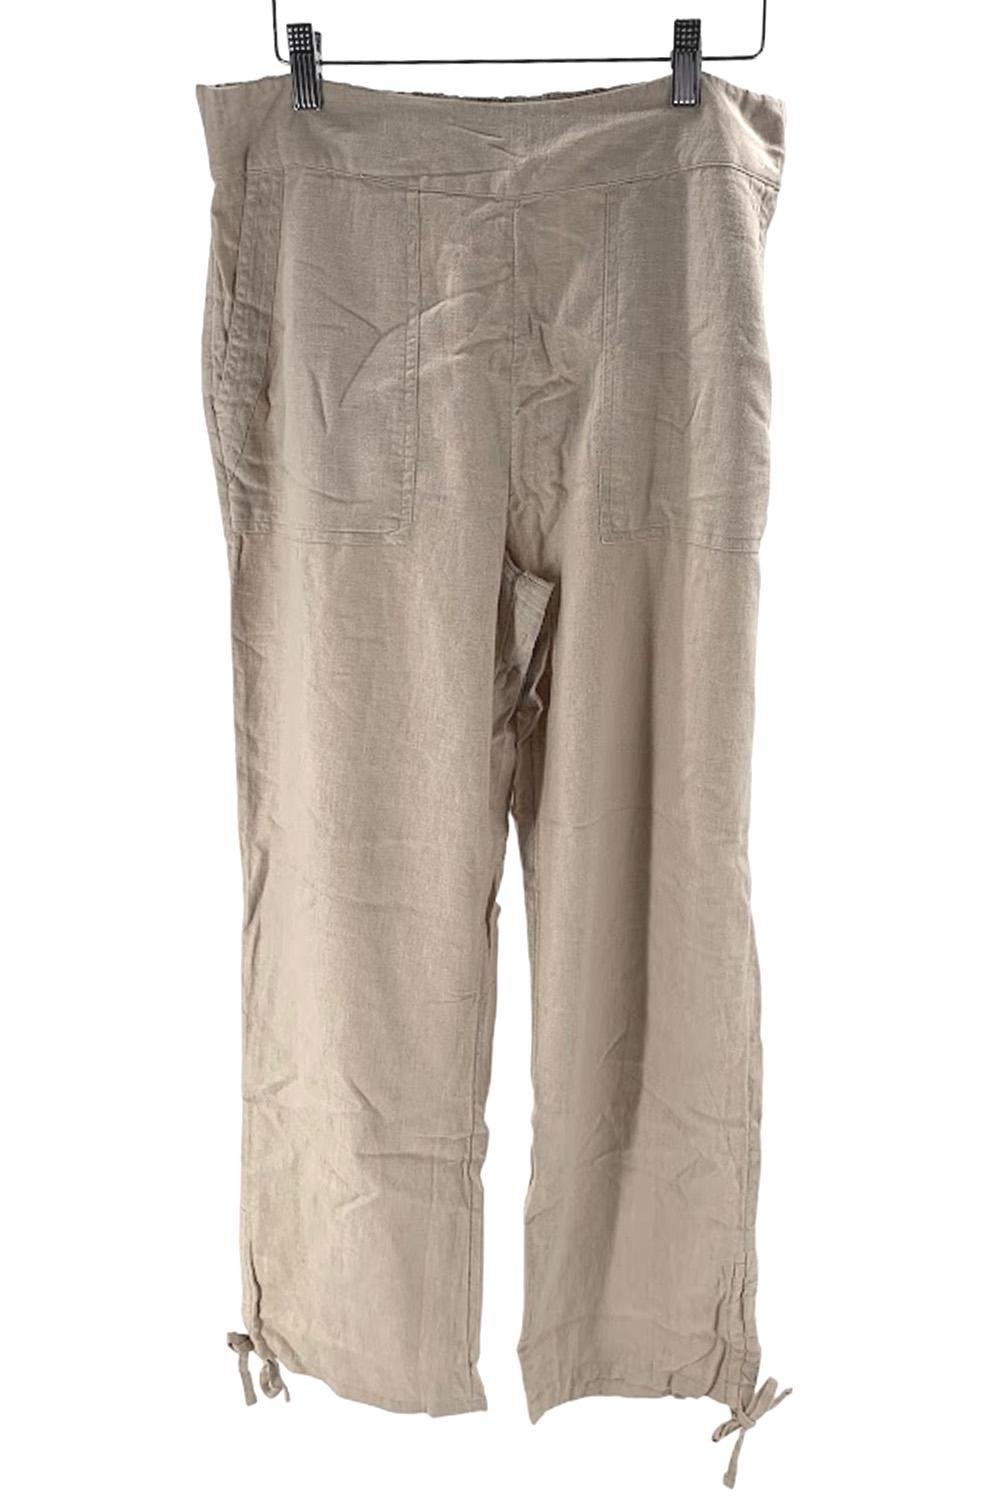 Joan Rivers Regular Knit Ponte Zipper Pocket Ankle Pant 